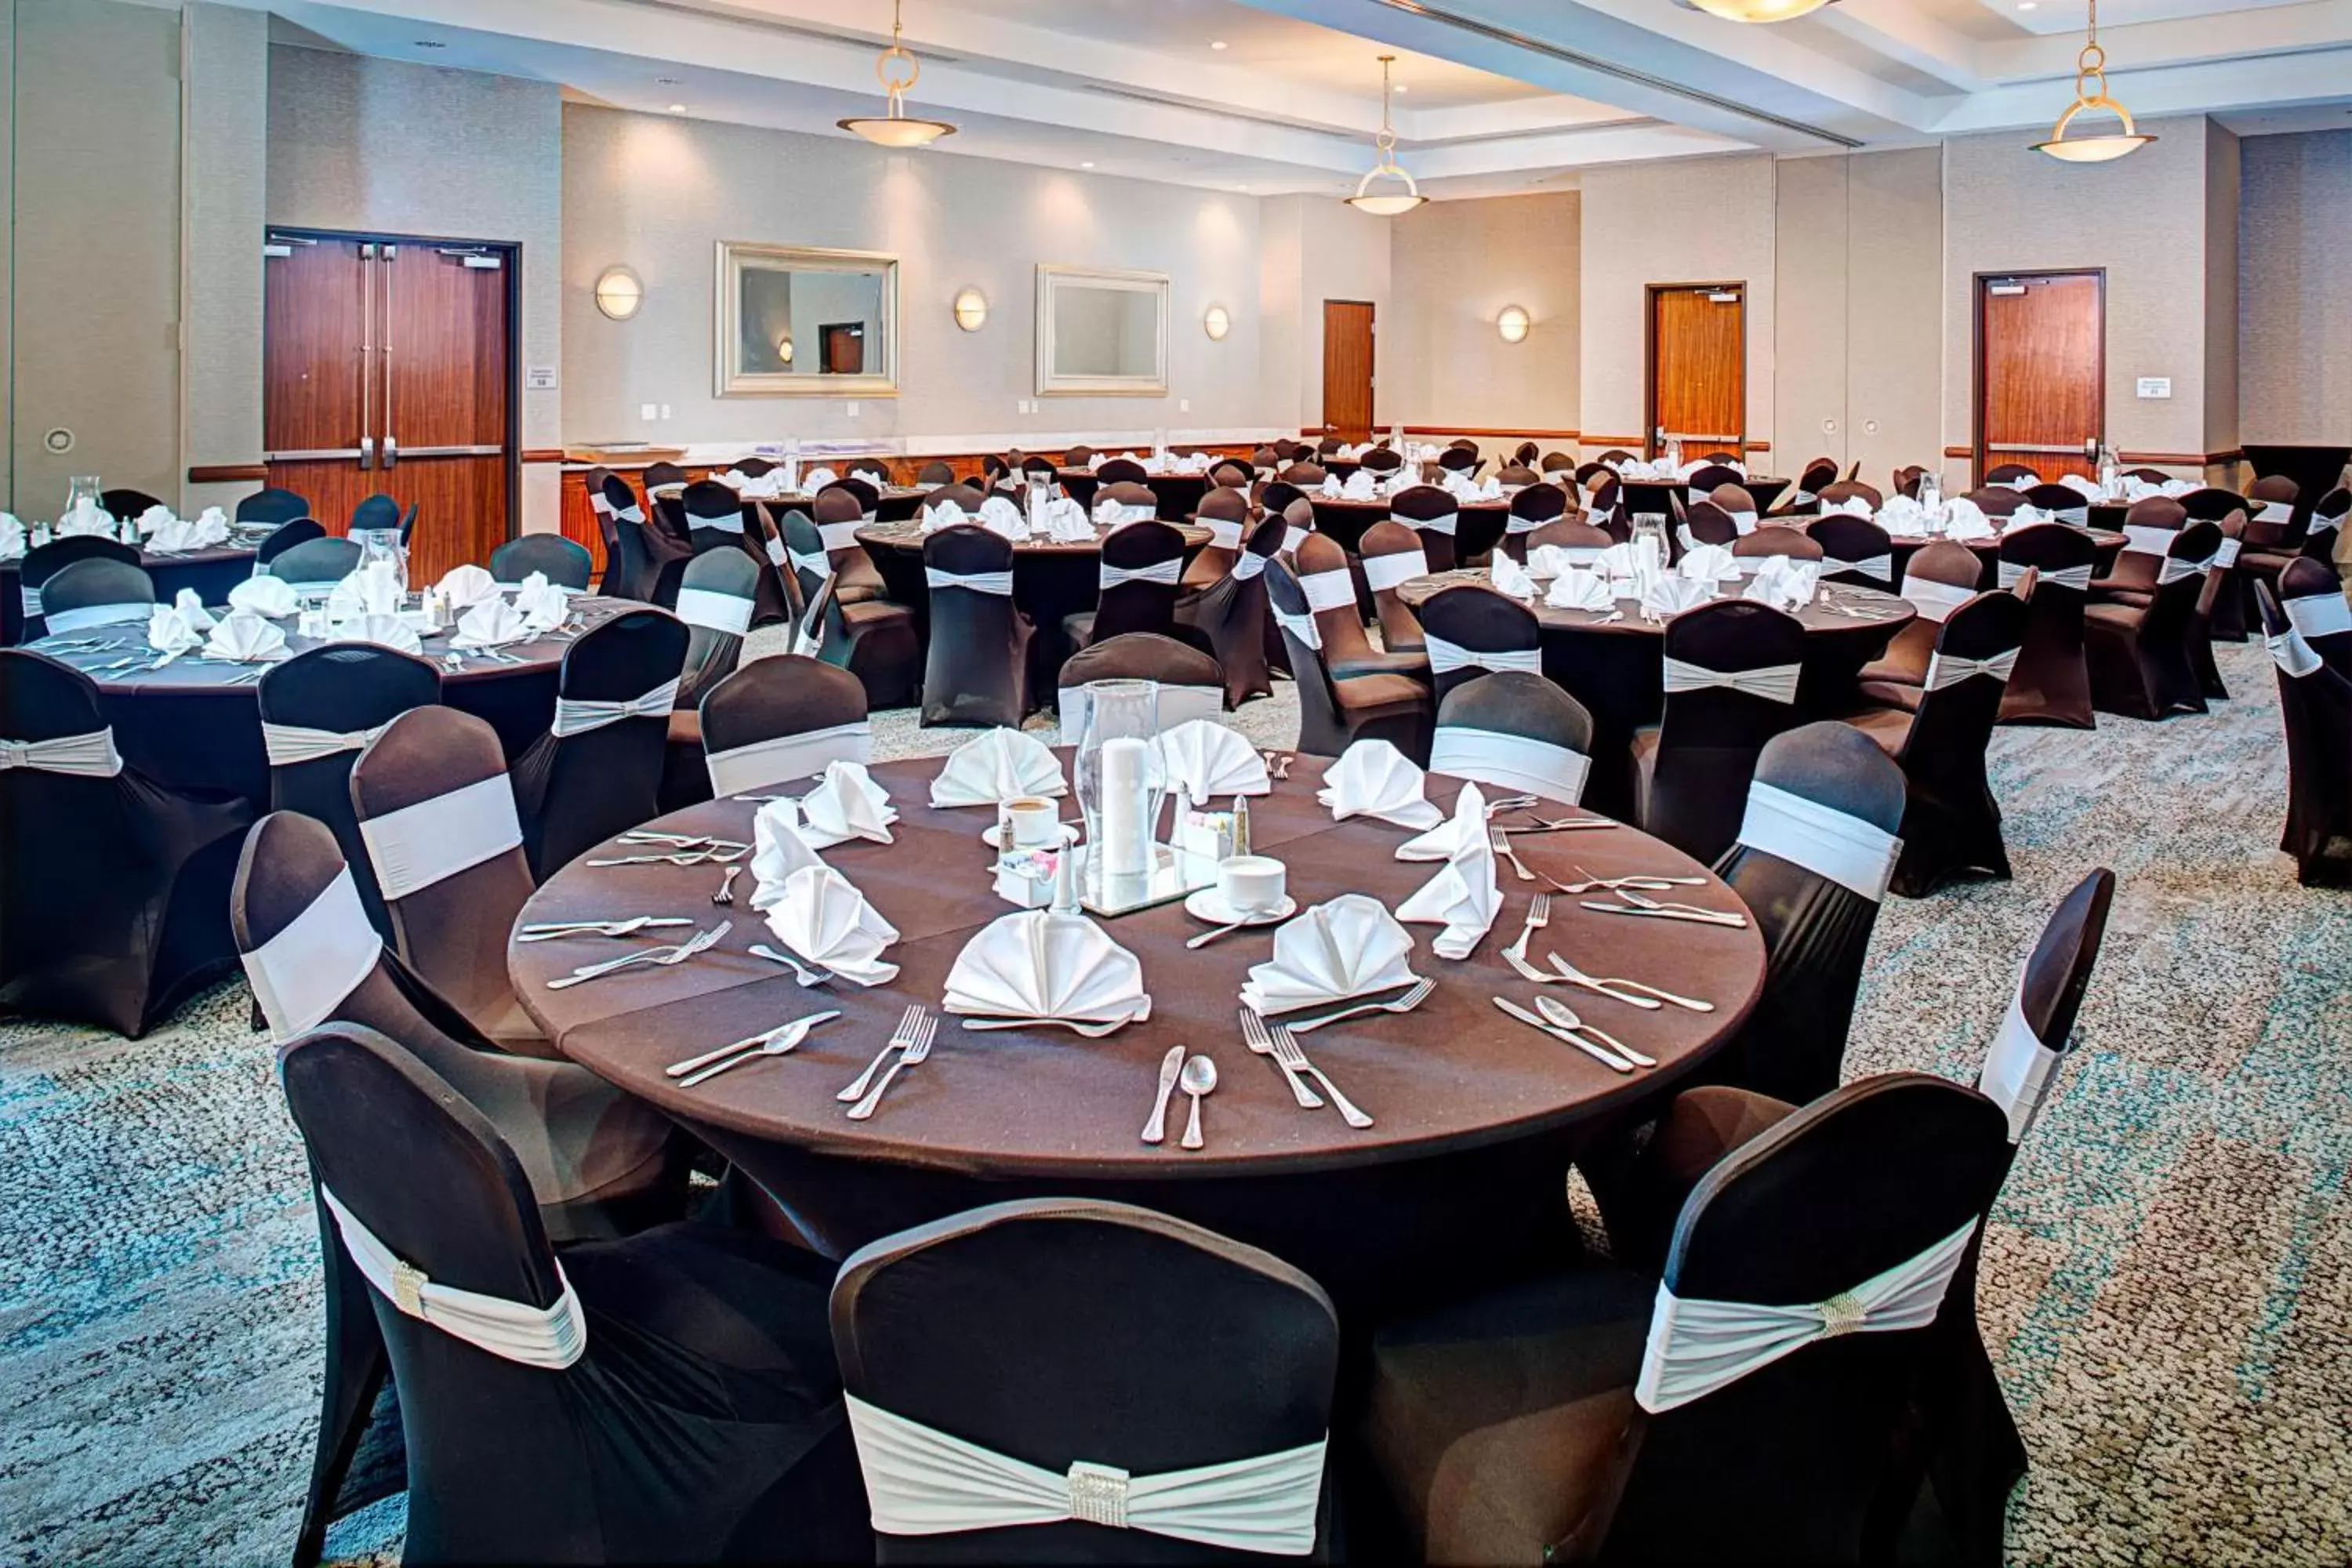 Meeting/conference room, Banquet Facilities in Courtyard by Marriott San Antonio SeaWorld®/Westover Hills